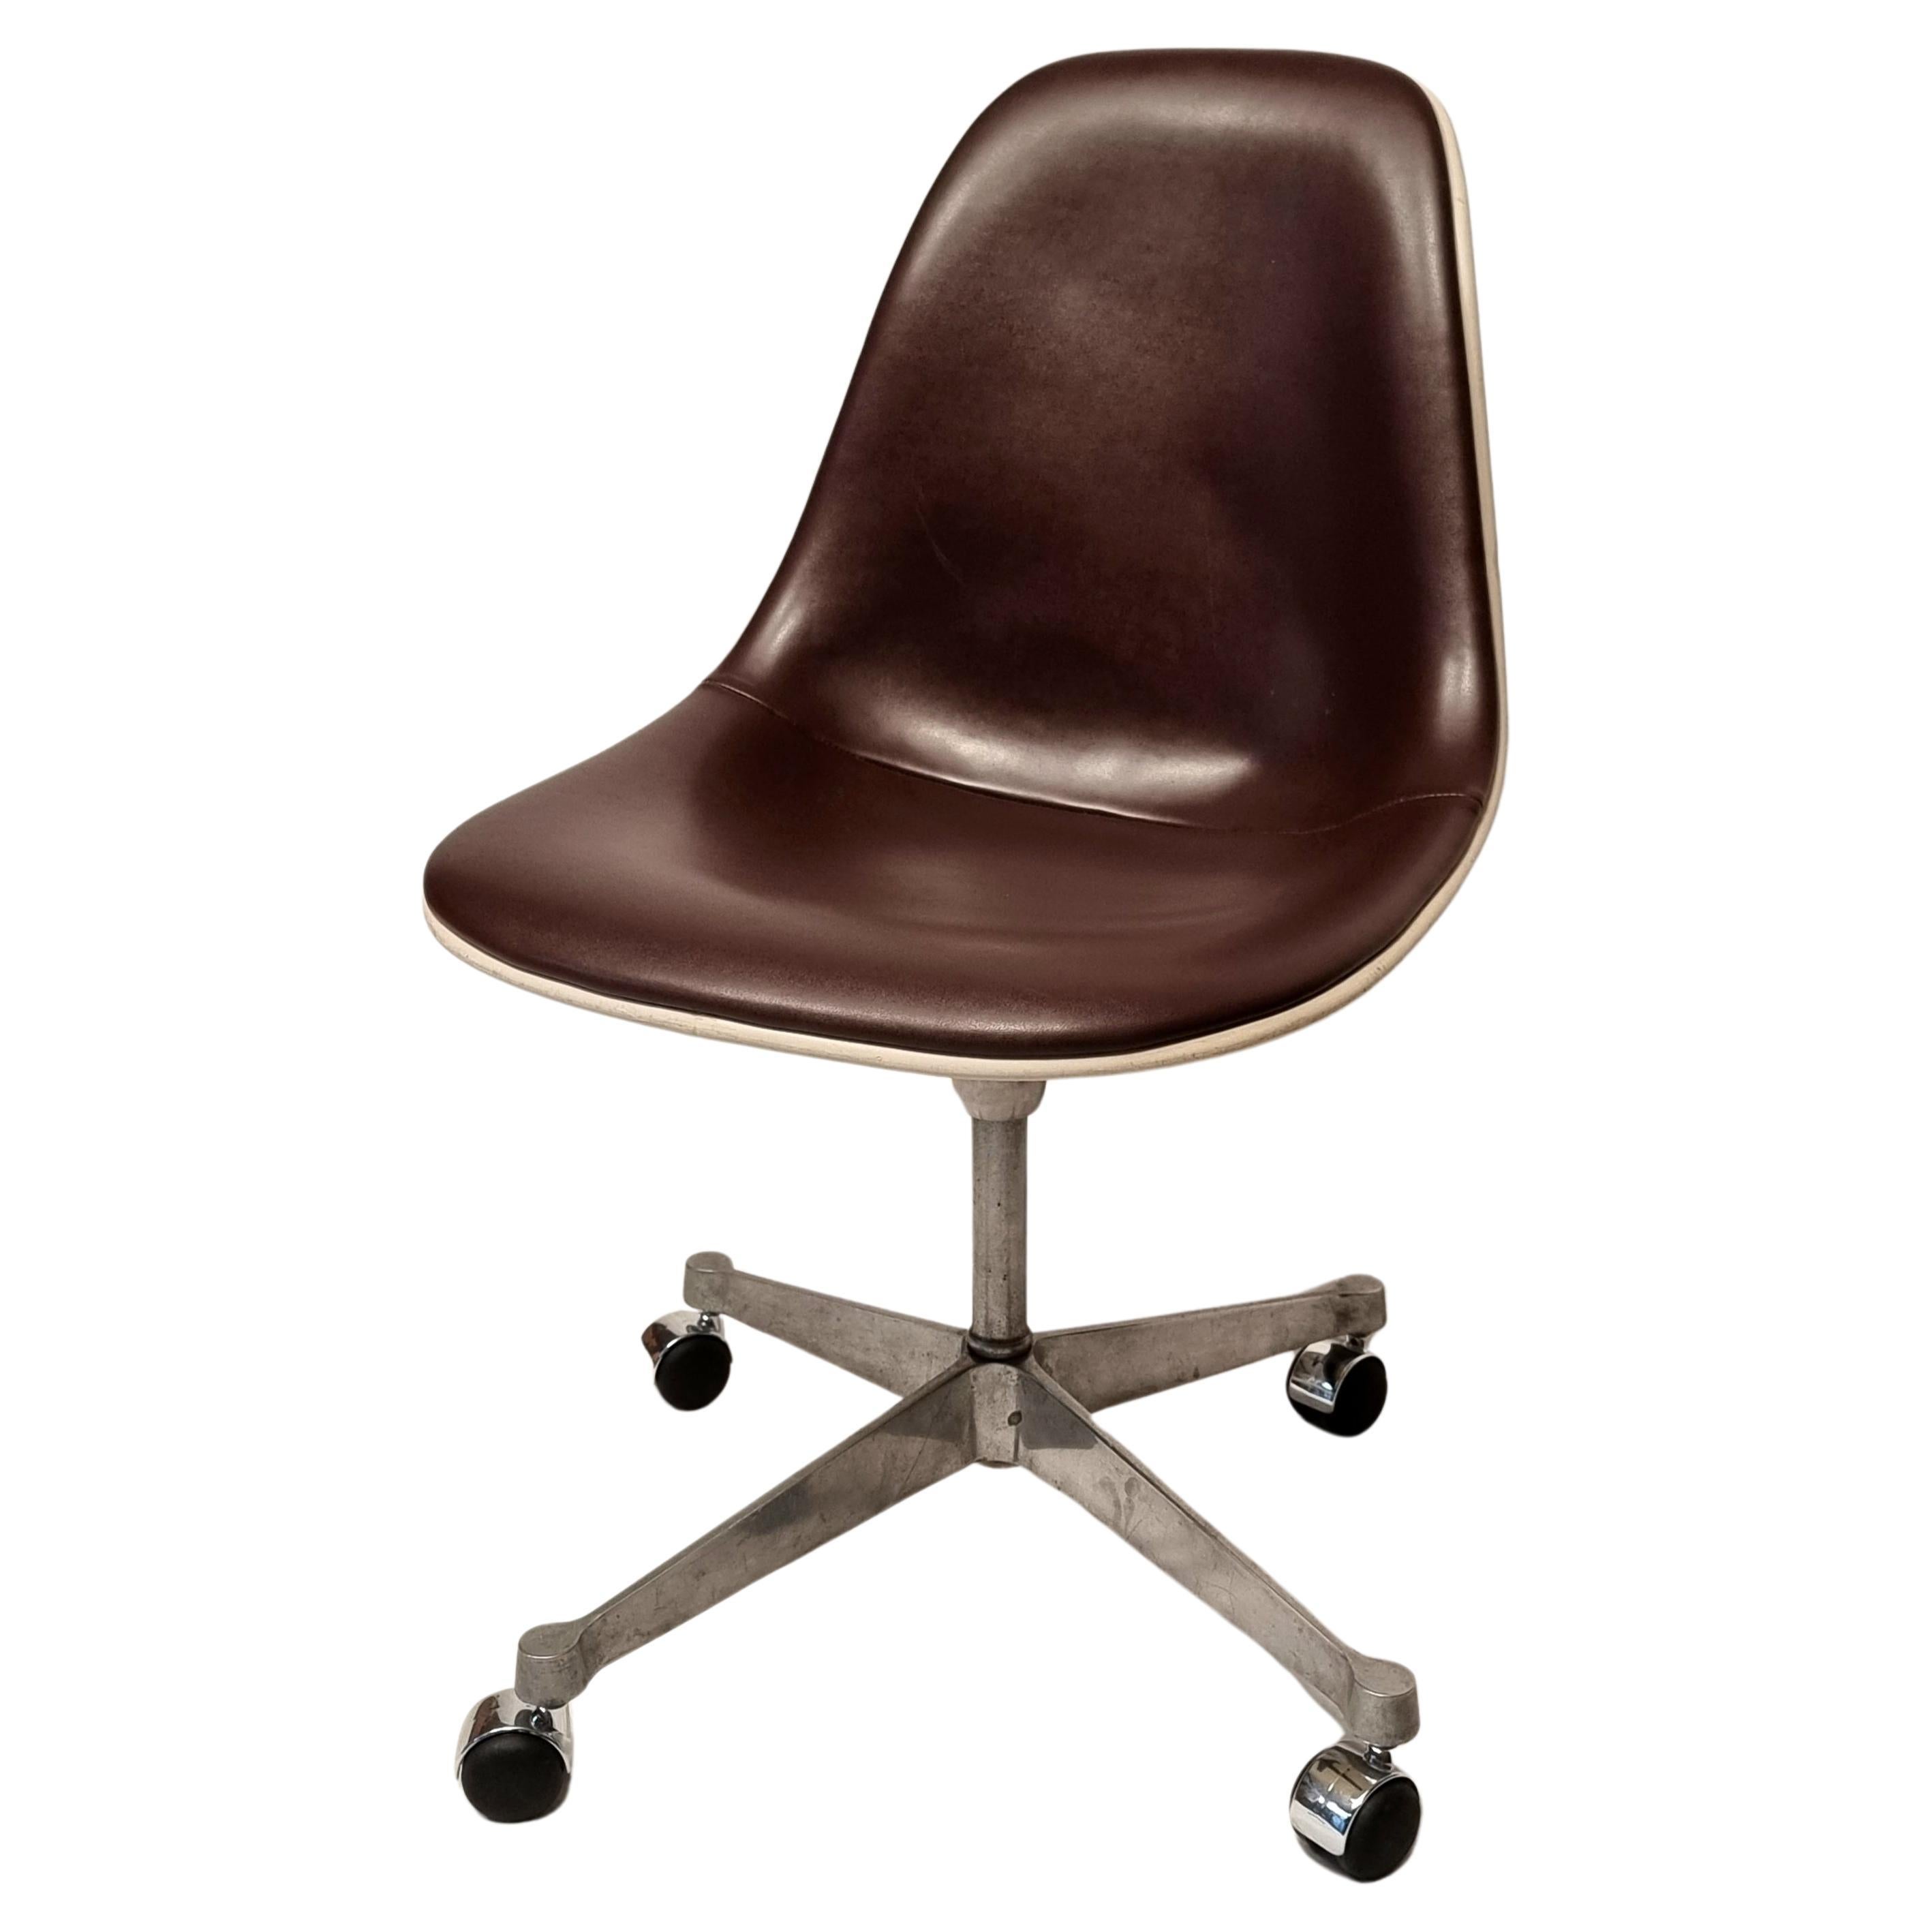 How do I identify a Herman Miller fiberglass chair?